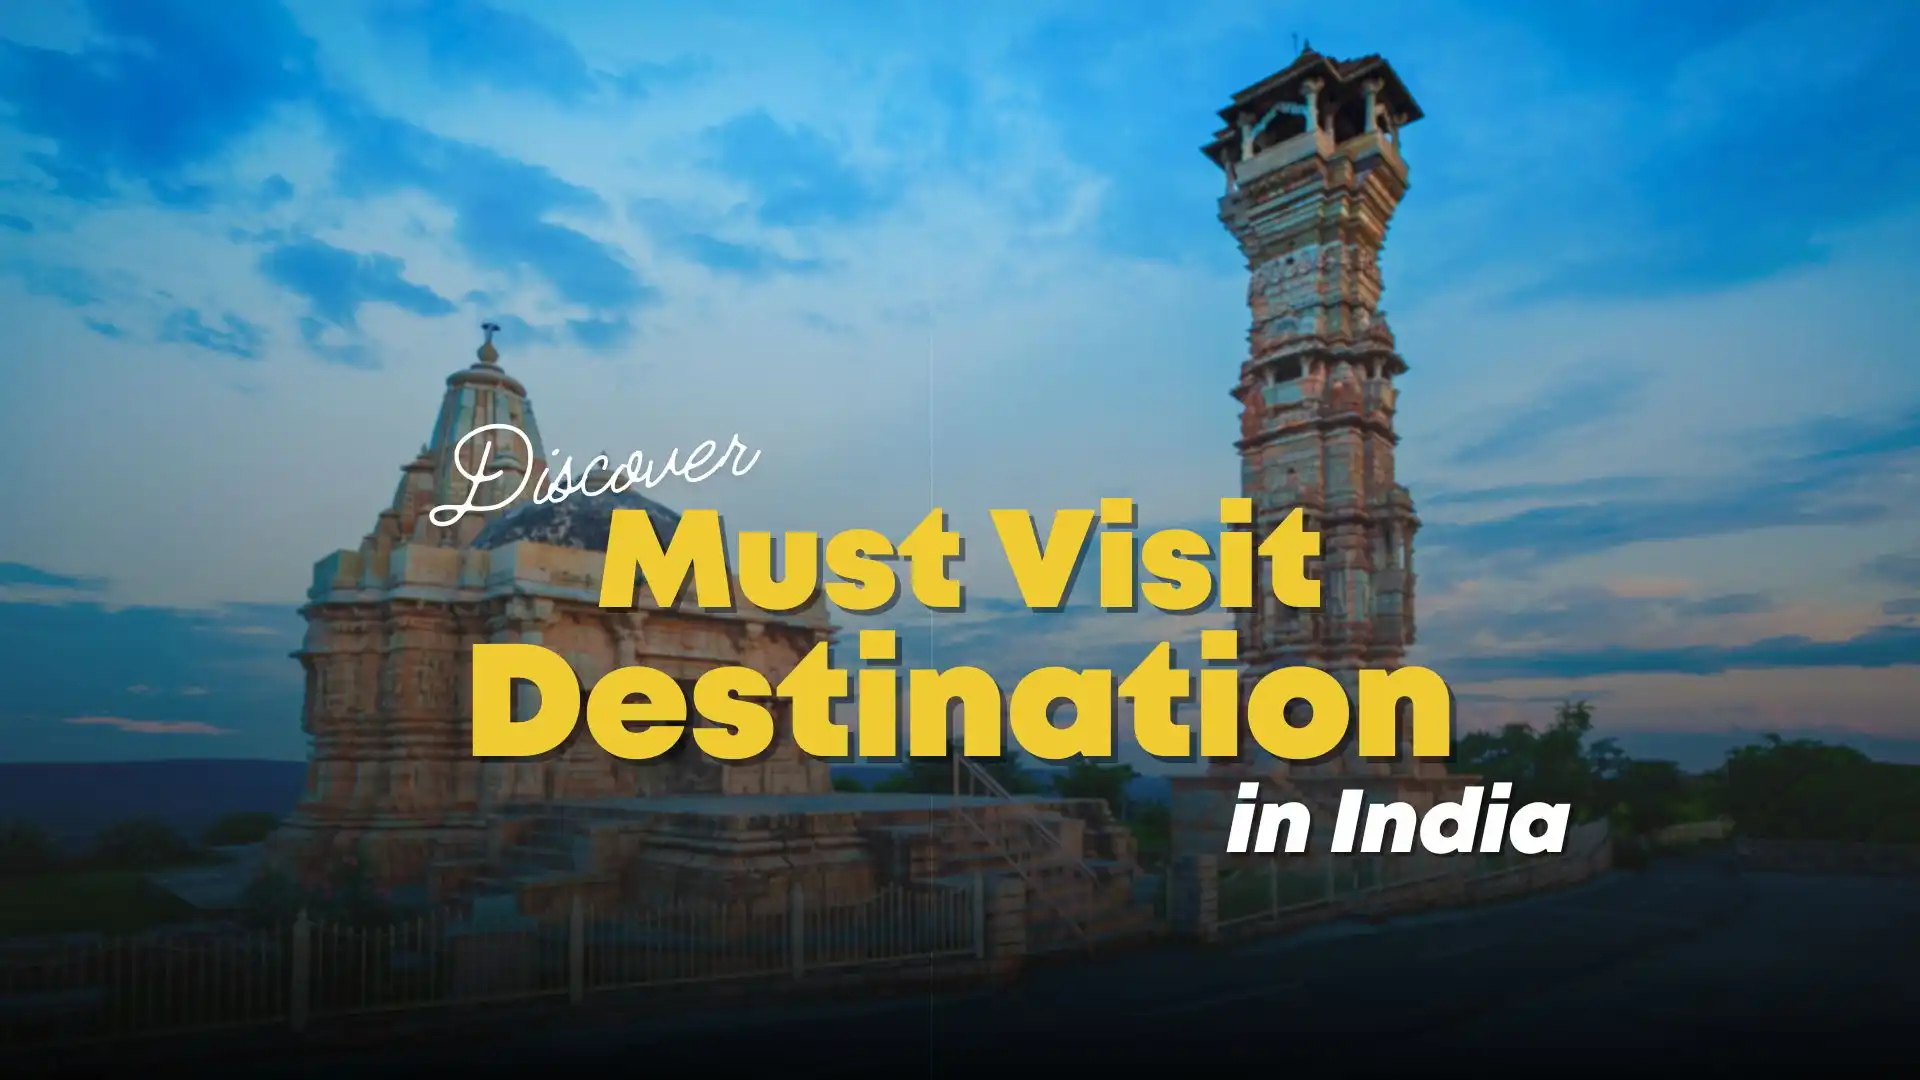 Top 10 Must-Visit Destinations in India